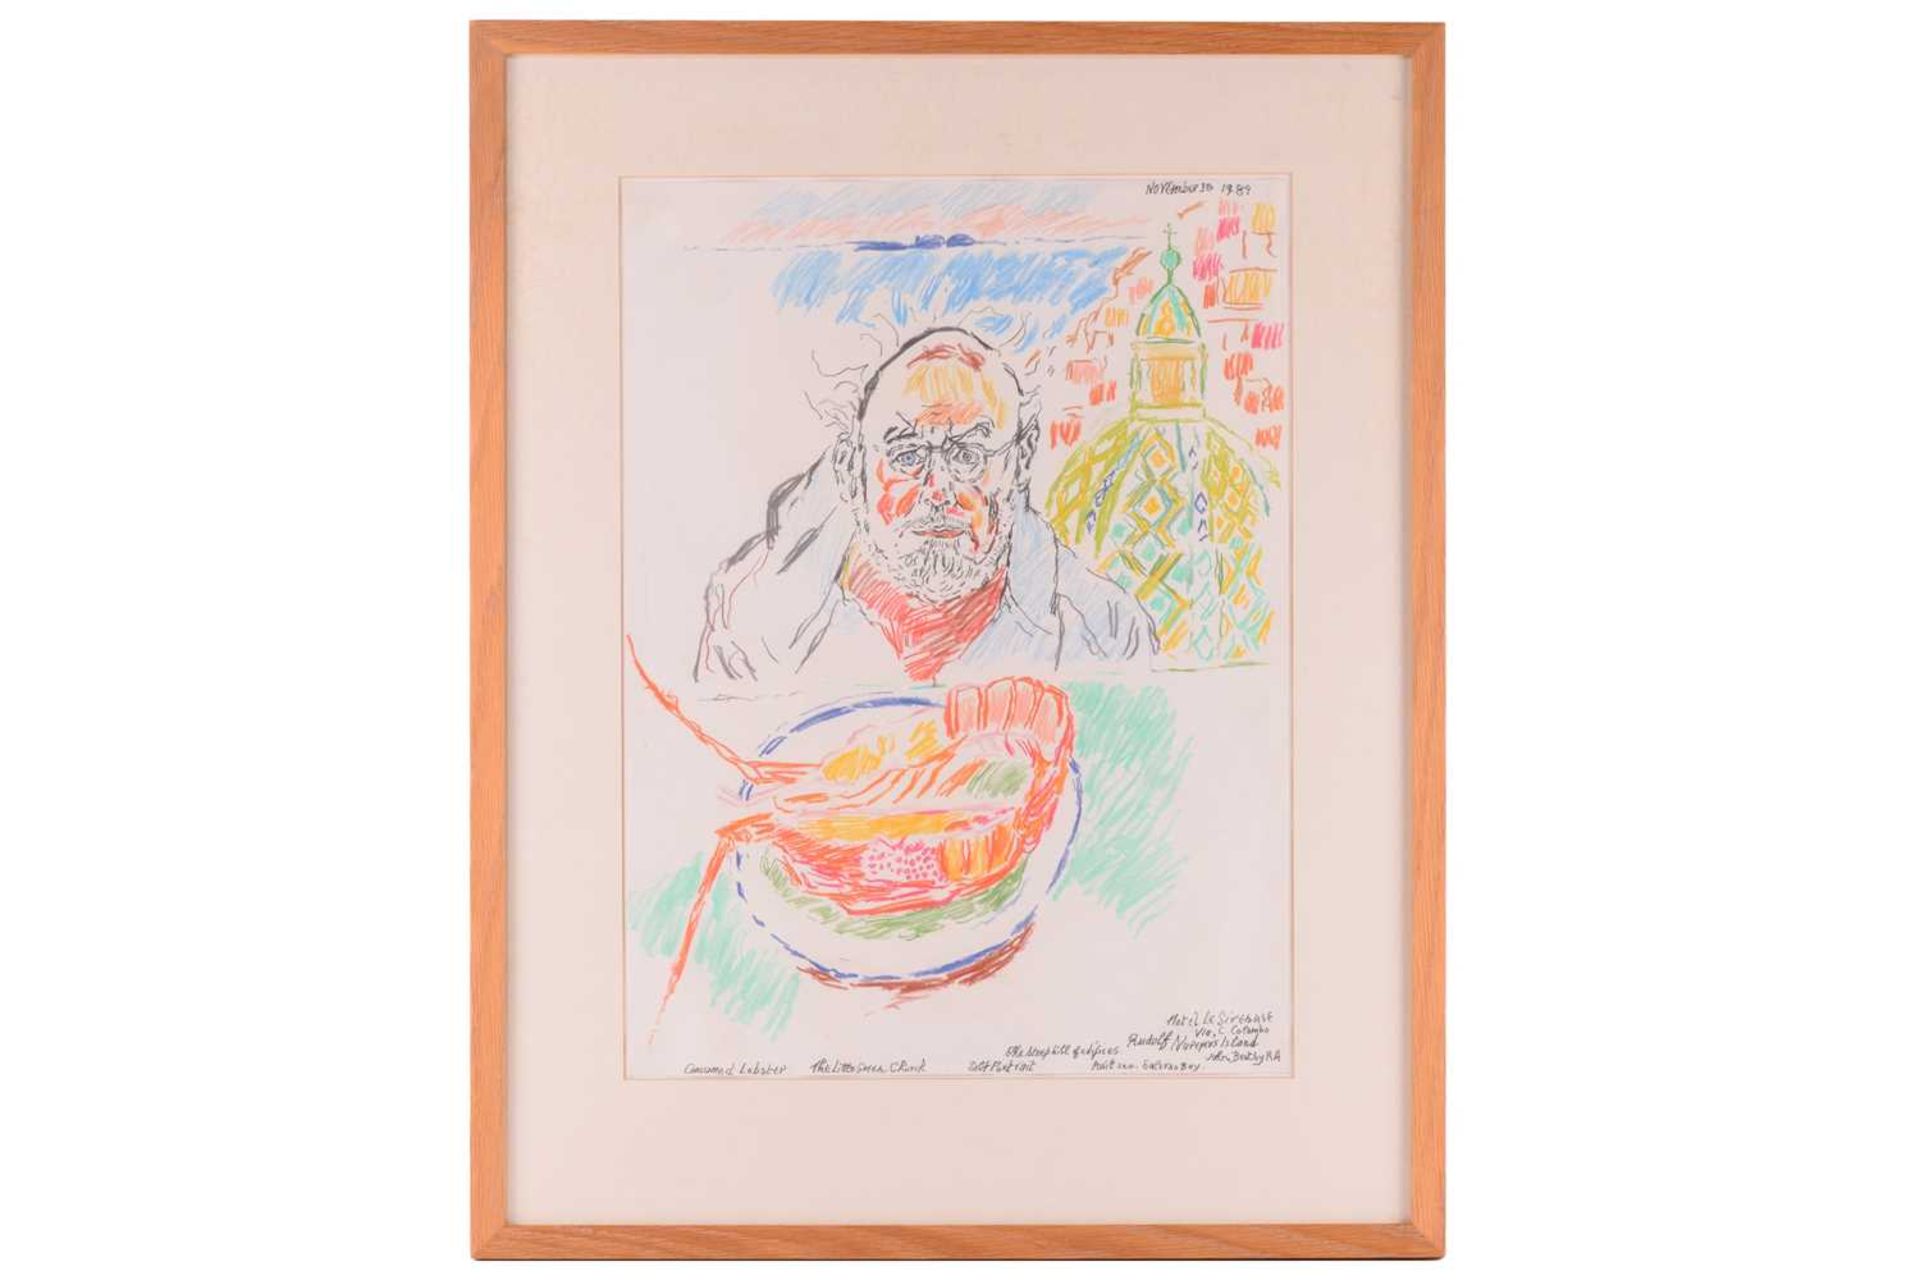 John Bratby (1928-1992), ‘Self Portrait, Positano, Italy 1989’, watercolour, oil chalks and